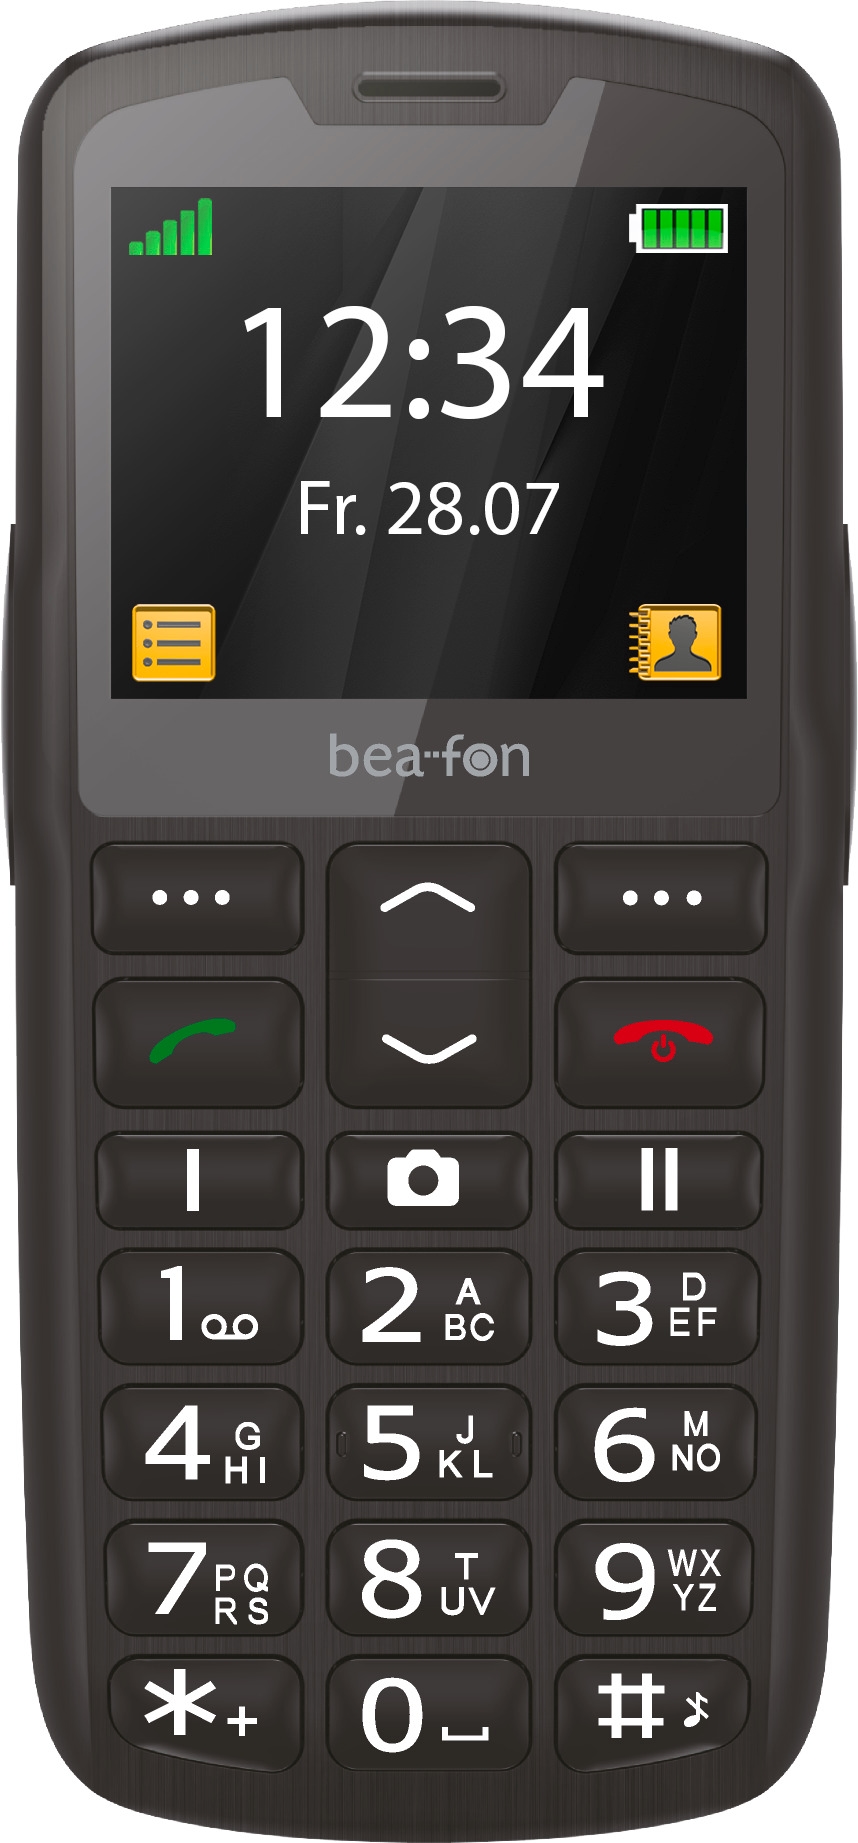 Beafon Handy »SL260 LTE«, Schwarz/Silber, 5,6 cm/2,2 Zoll